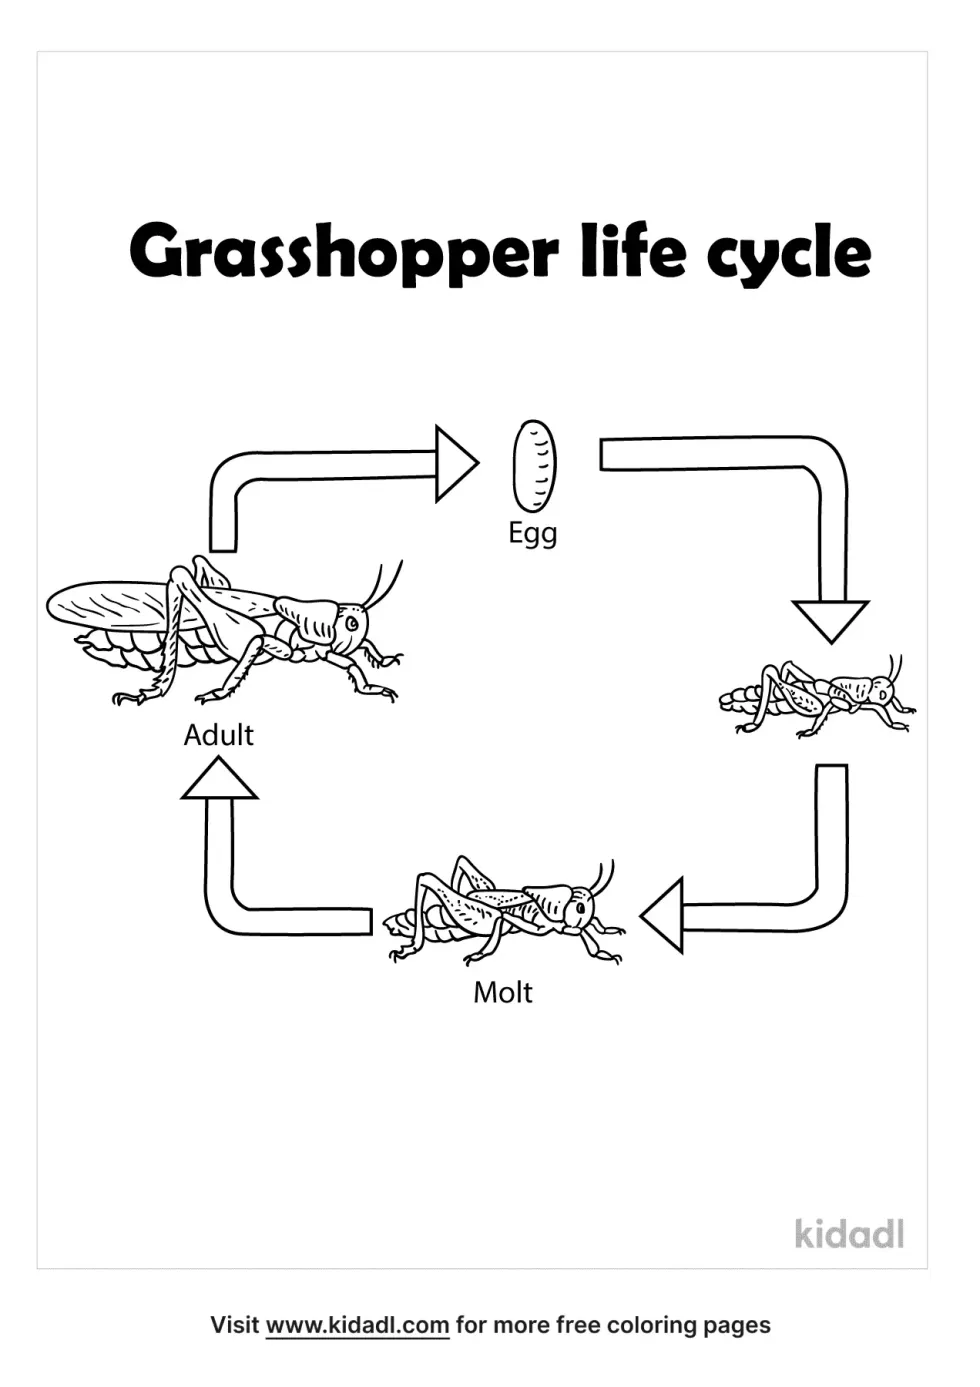 Grasshopper Lifecycle